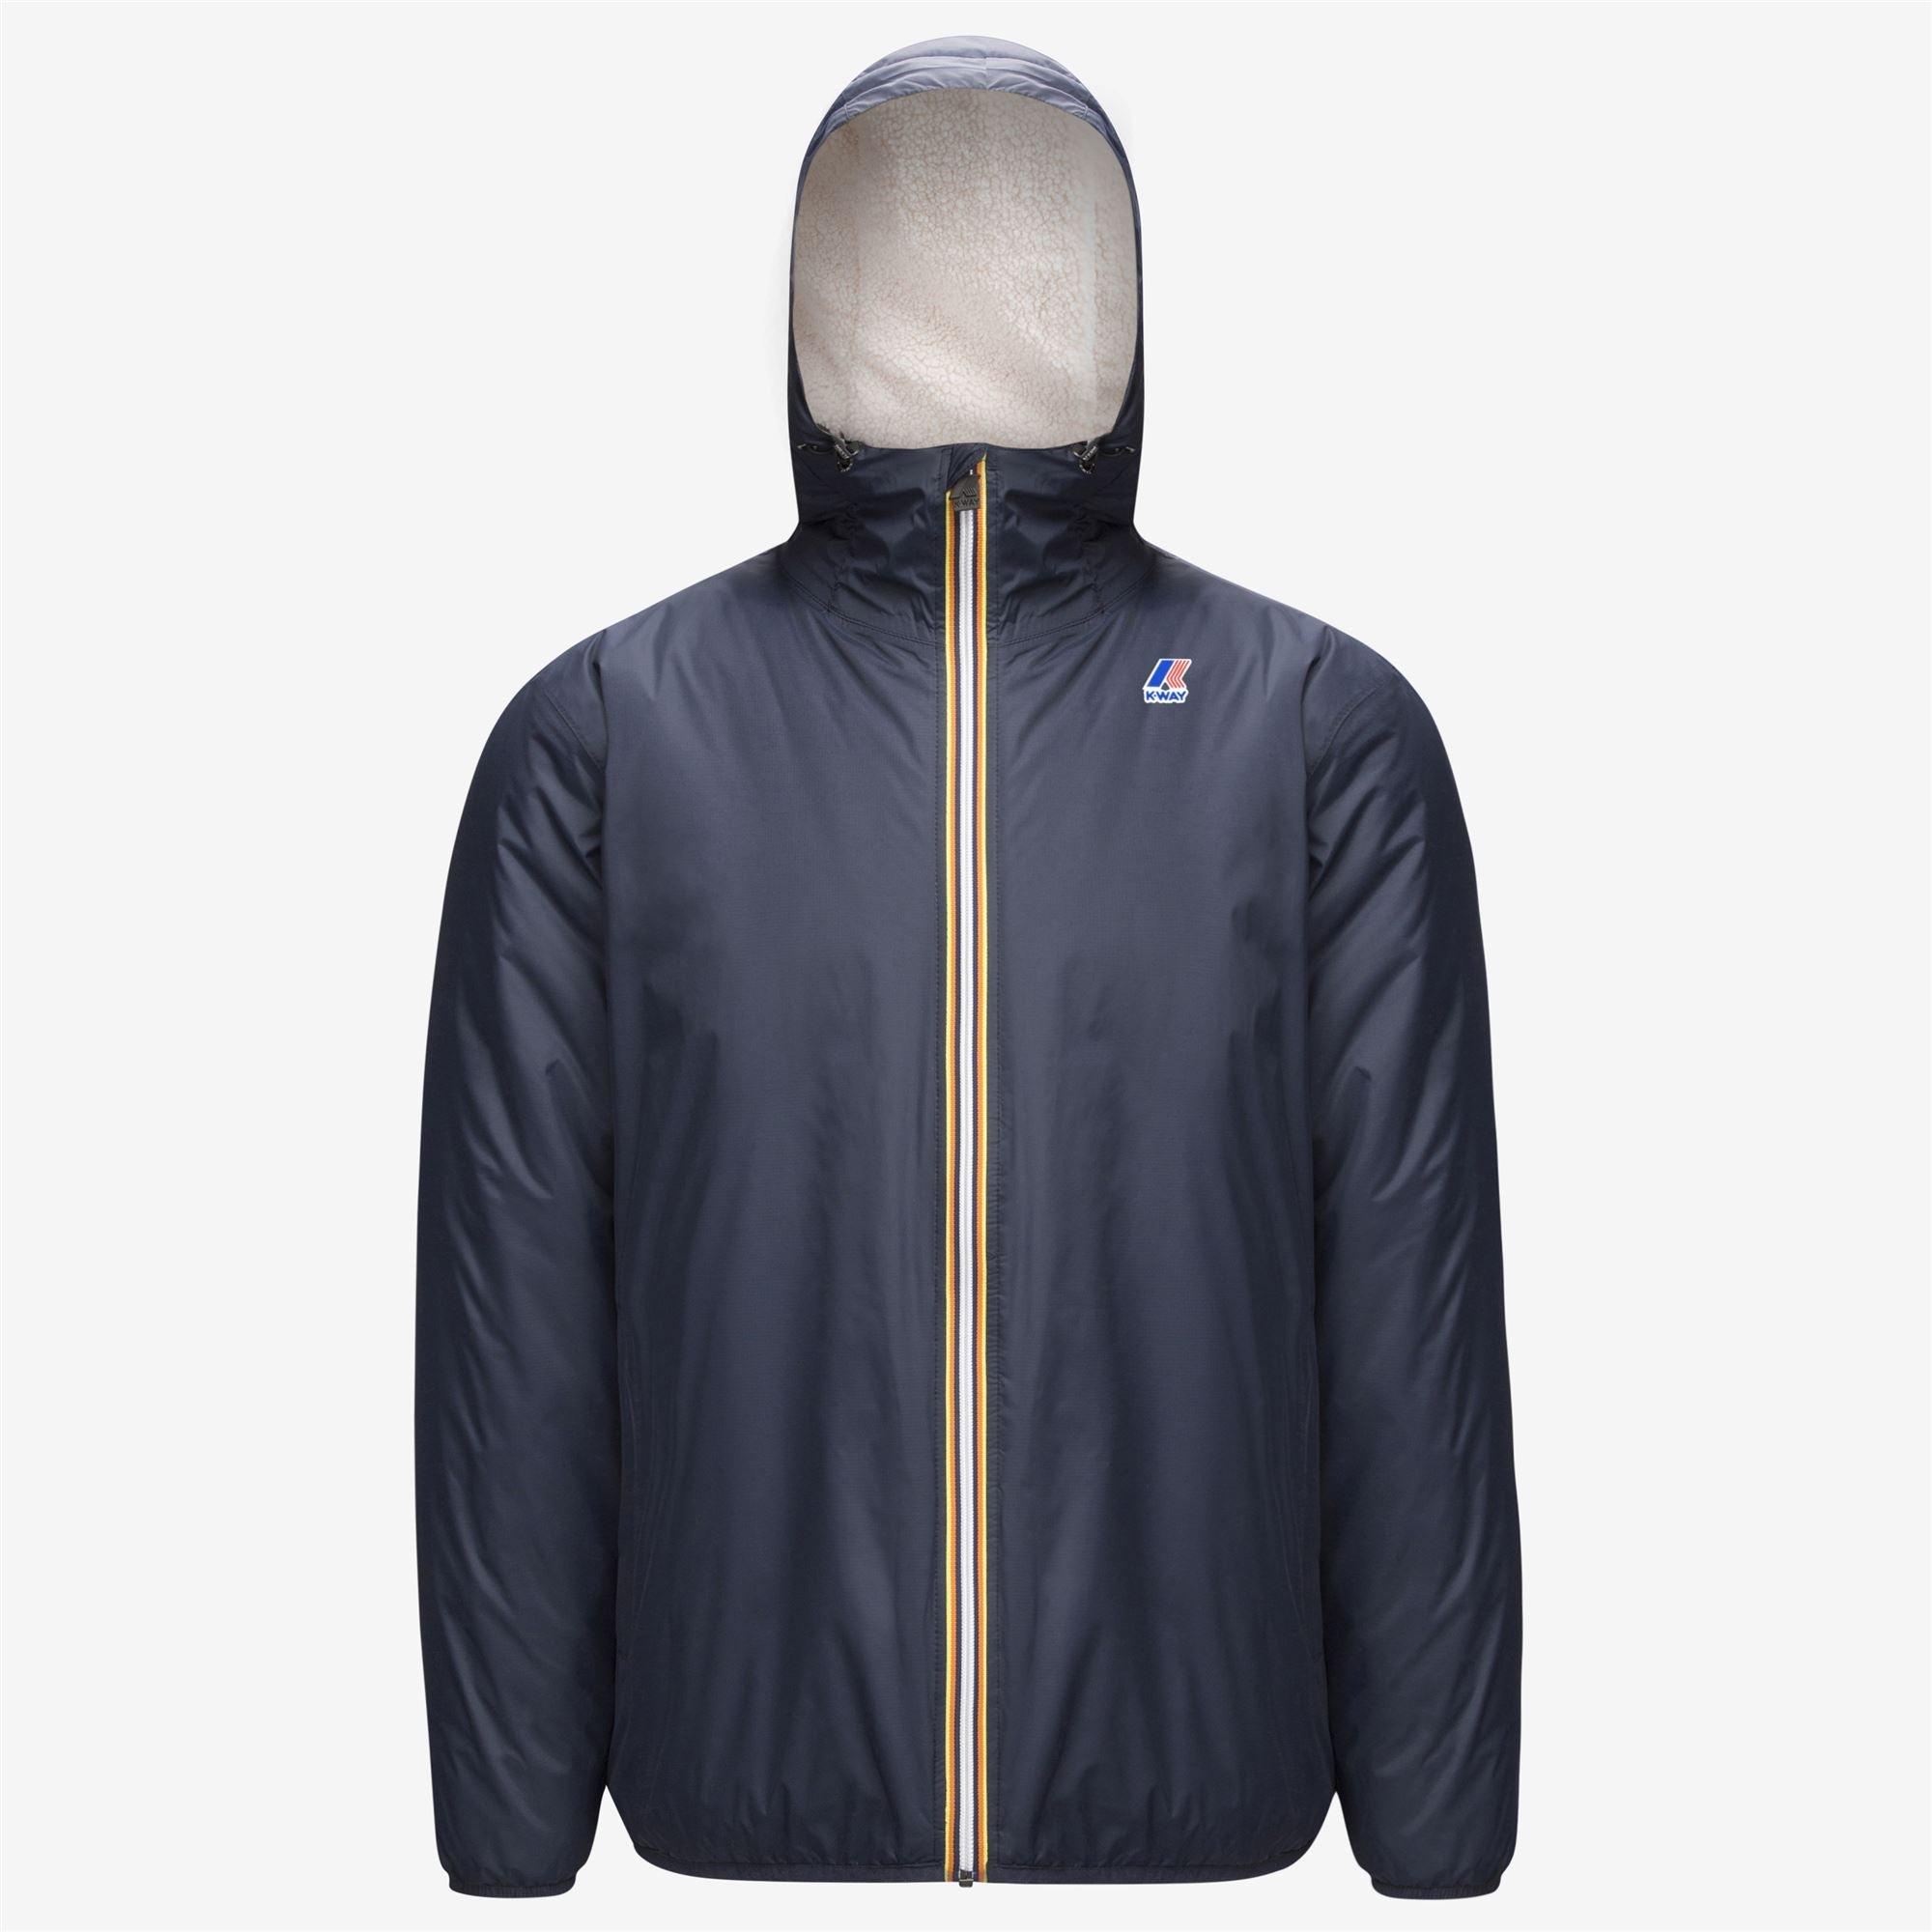 Claude Orsetto - Unisex Lined Full Zip Rain Jacket in Blue Depht